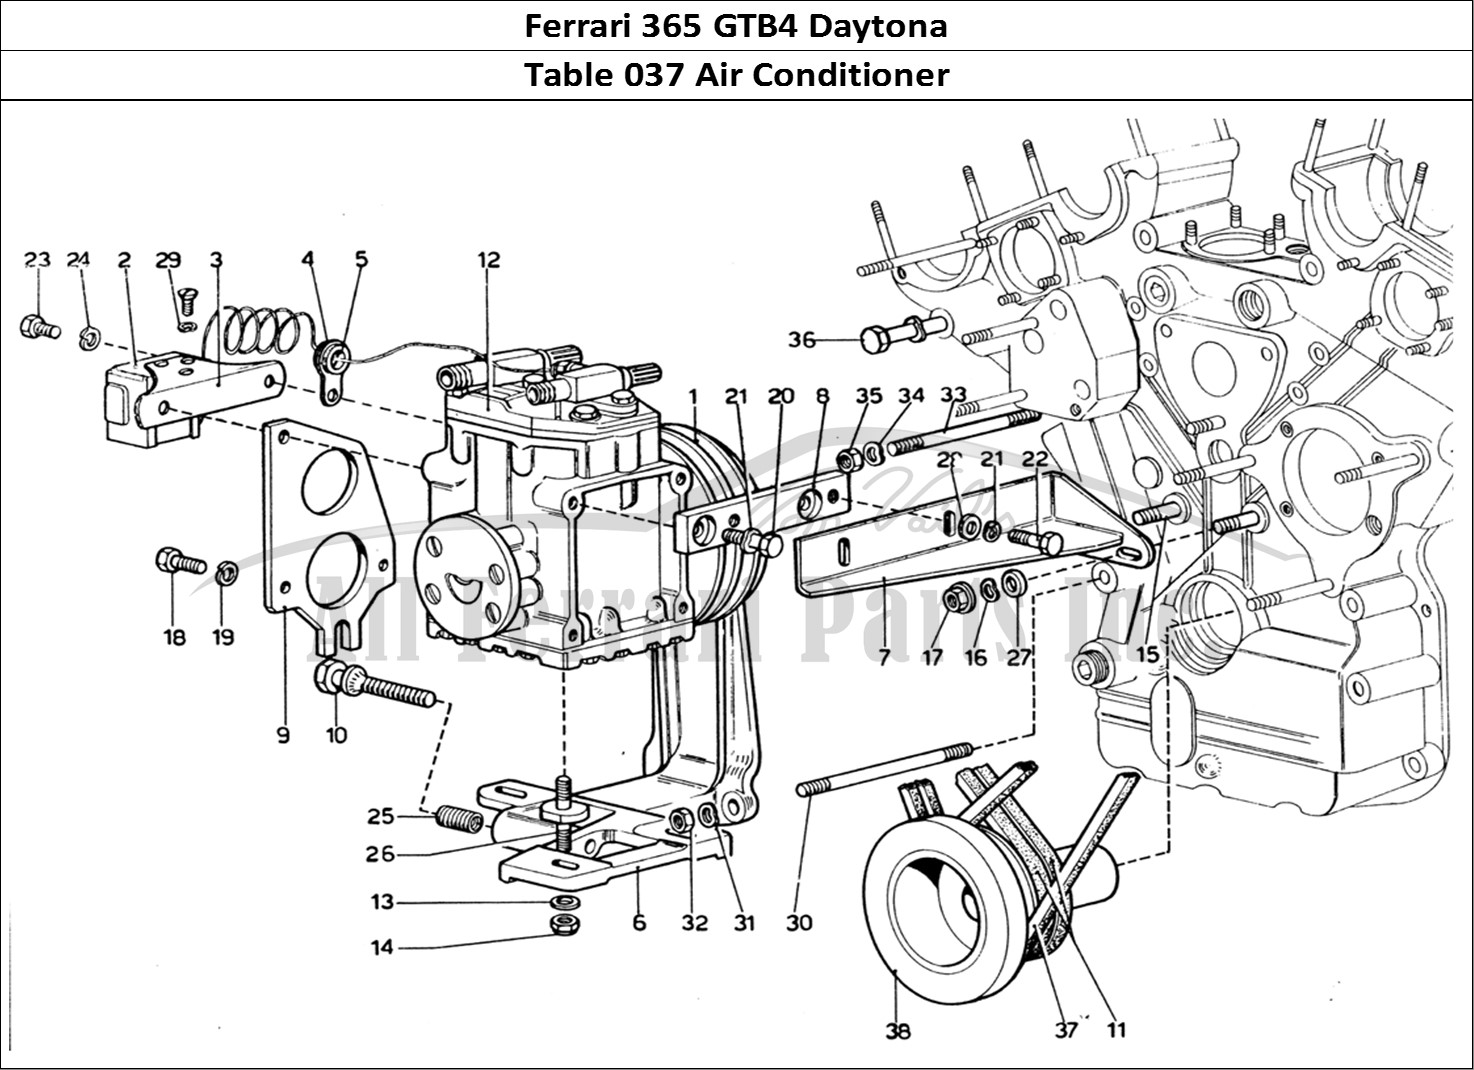 Ferrari Parts Ferrari 365 GTB4 Daytona (1969) Page 037 Air Conditioning